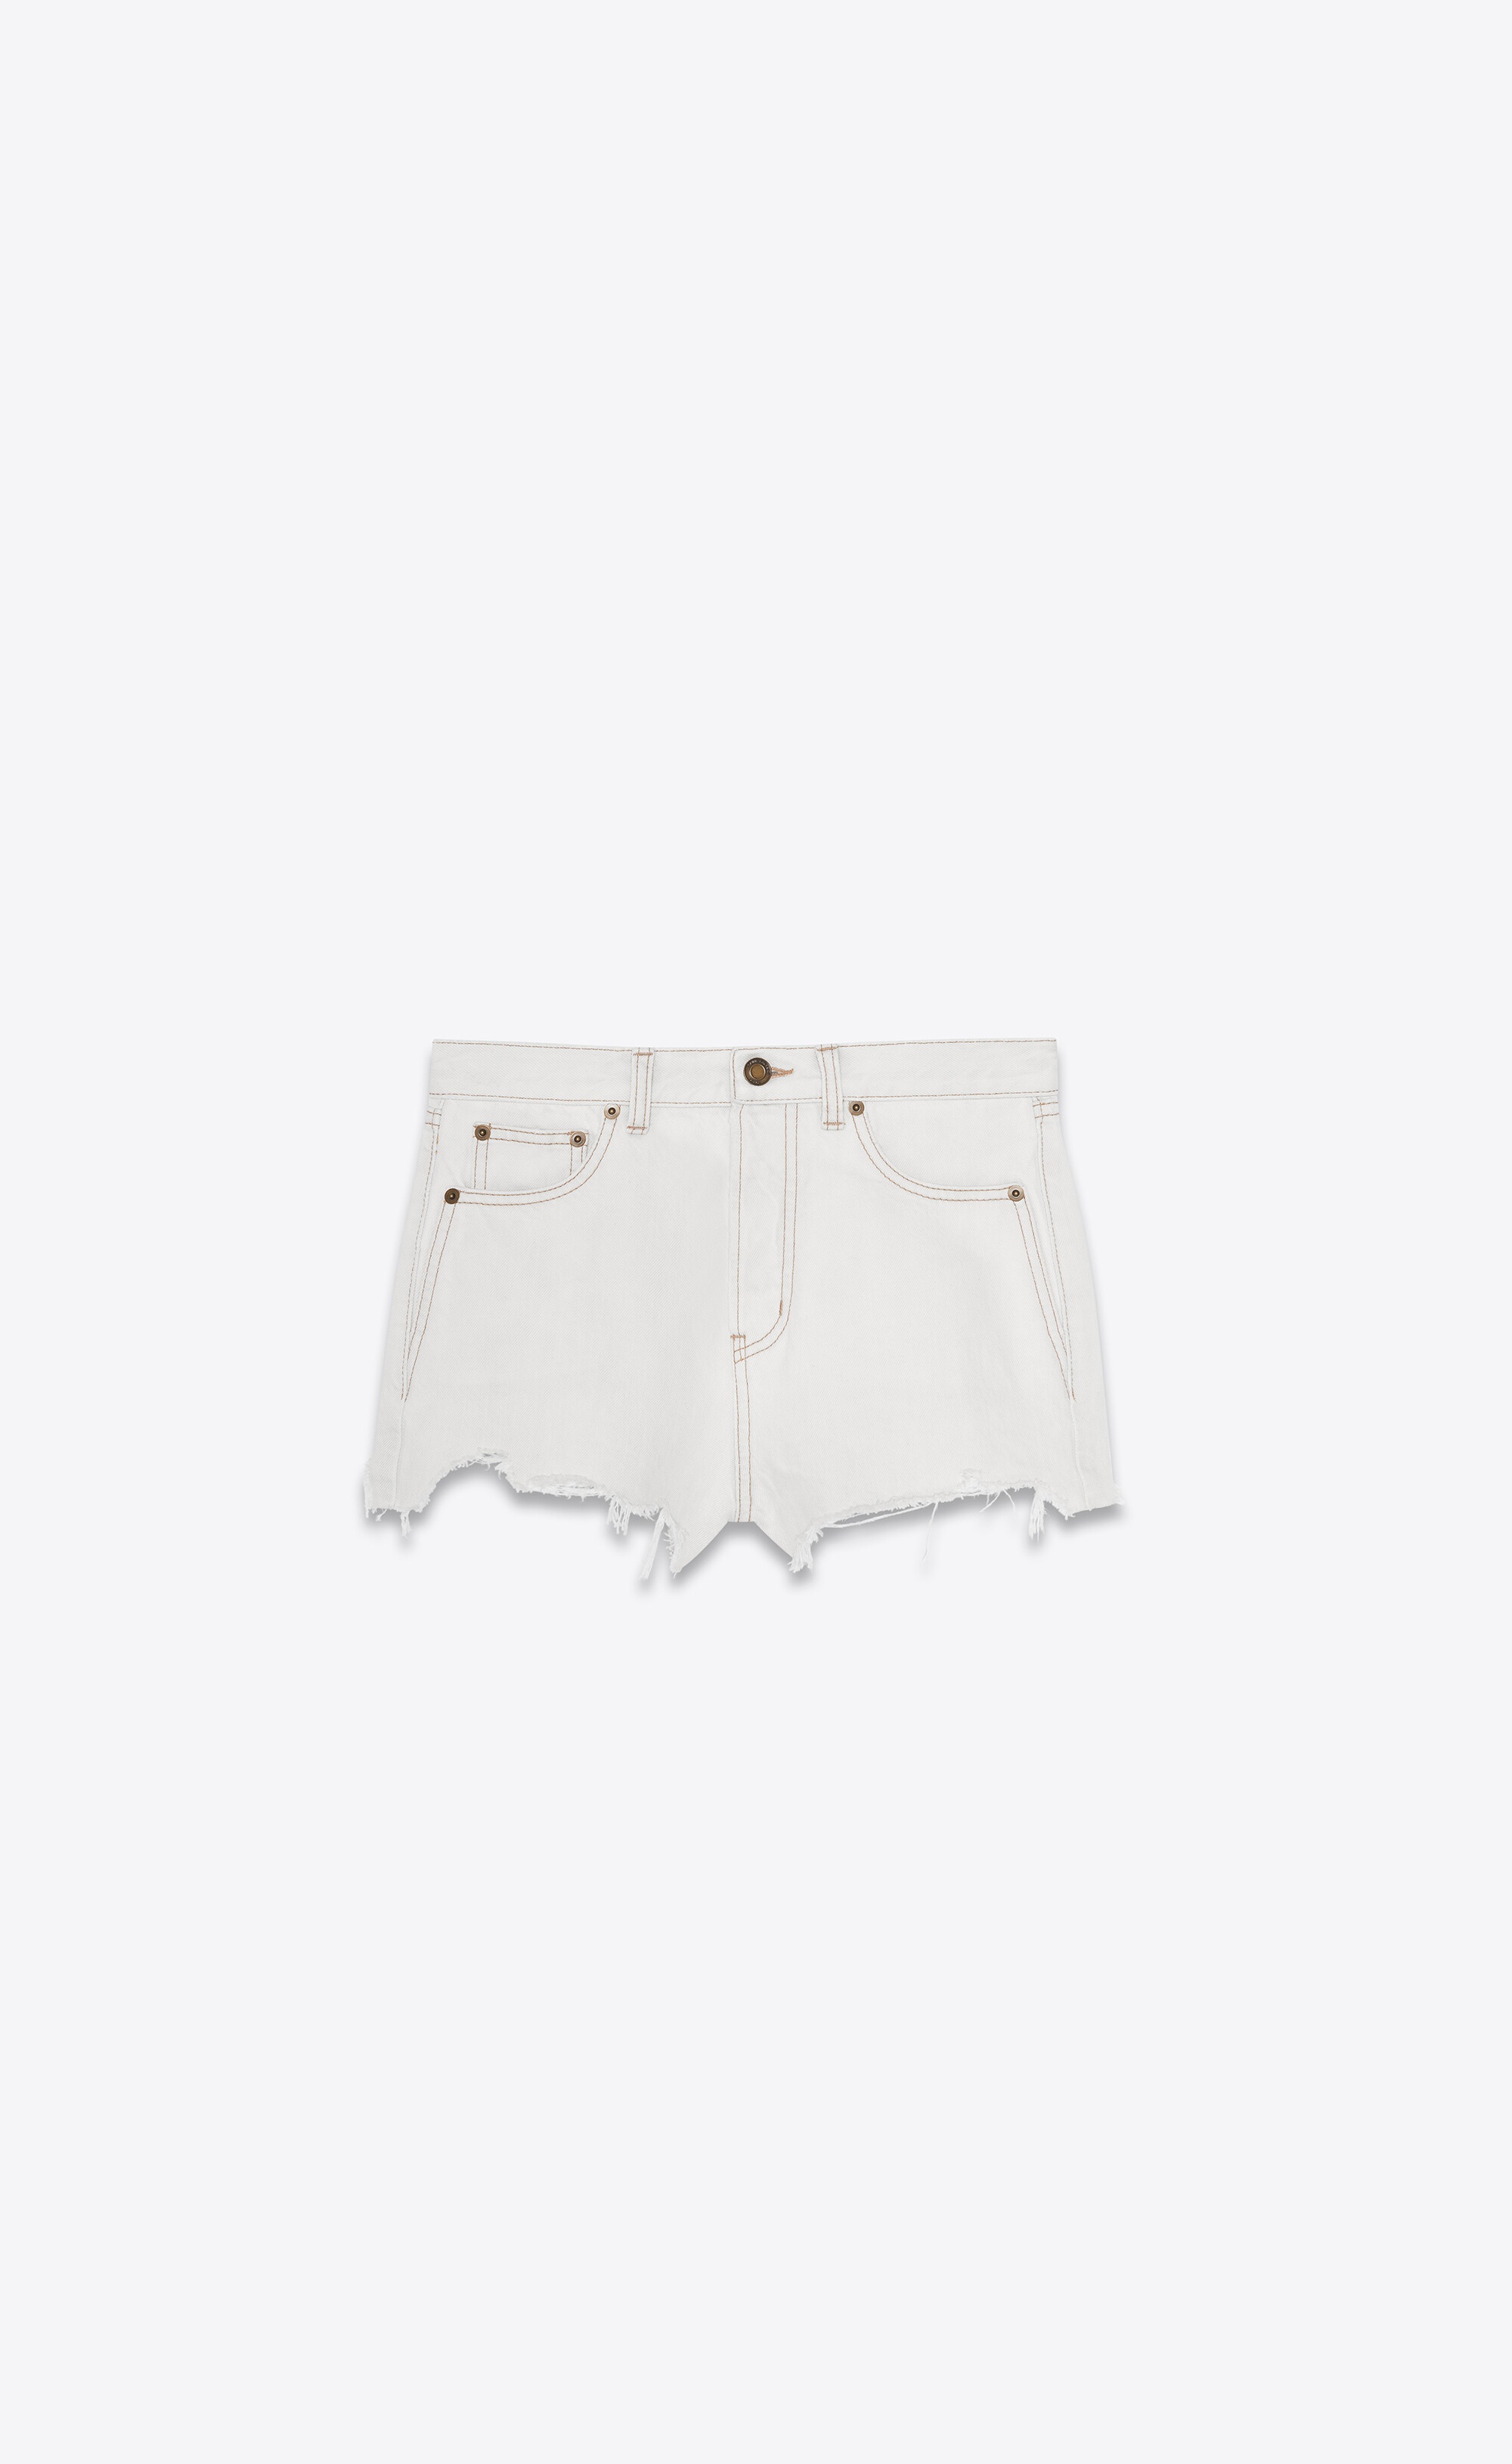 raw-edge shorts in gray off-white denim - 1